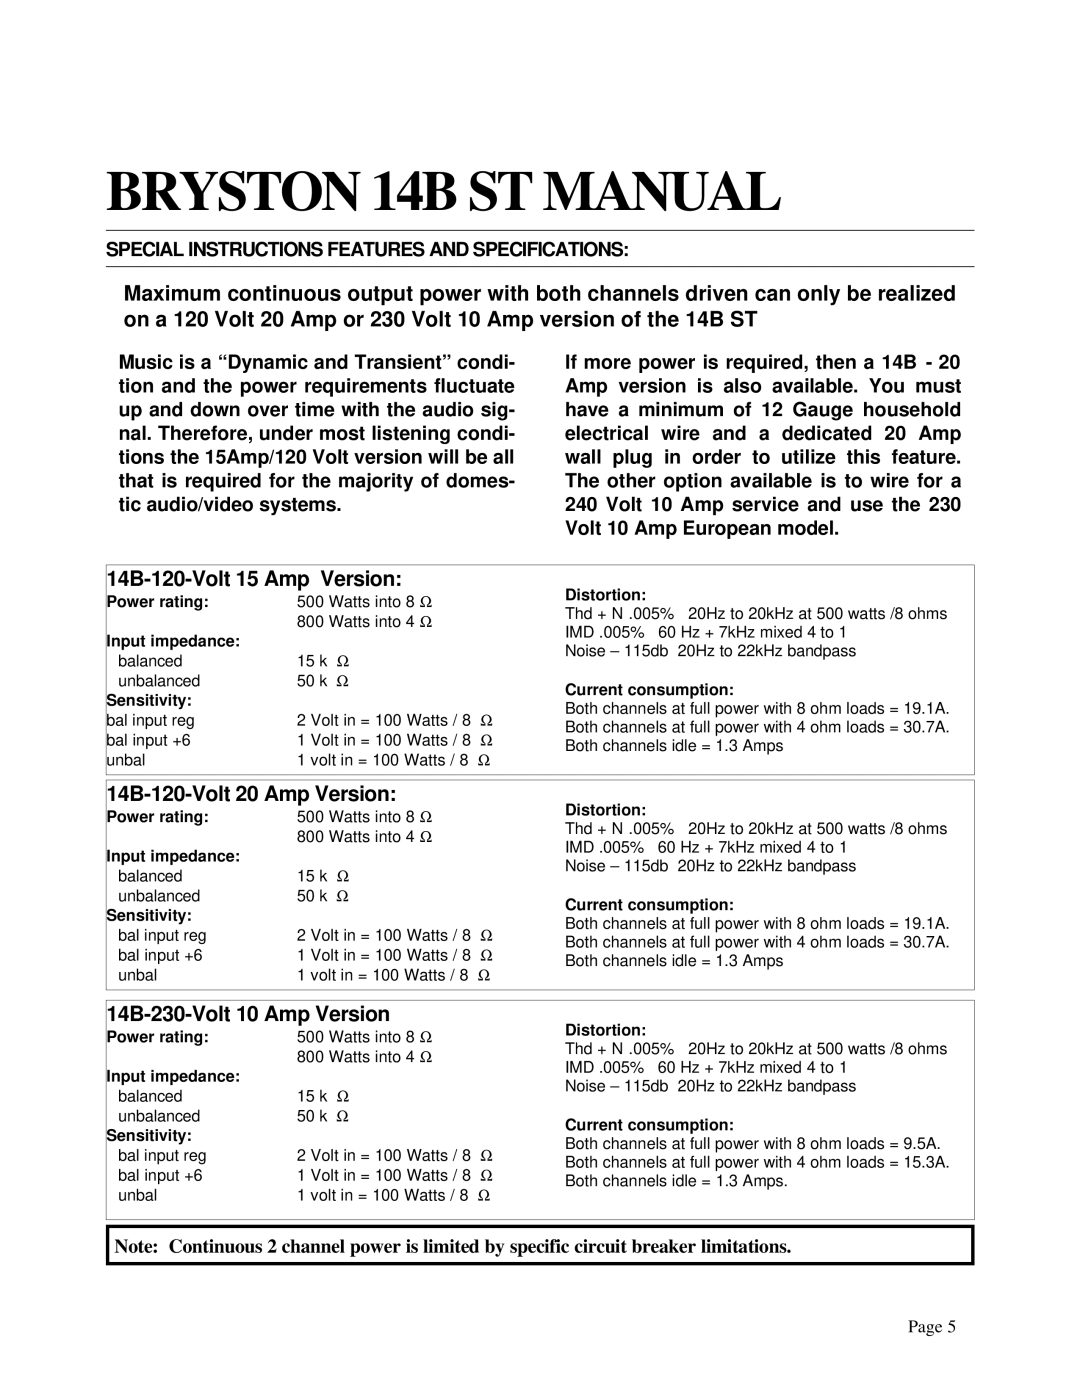 Bryston l14BST 14B-120-Volt15 Amp Version, 14B-120-Volt20 Amp Version, 14B-230-Volt10 Amp Version, BRYSTON 14B ST MANUAL 